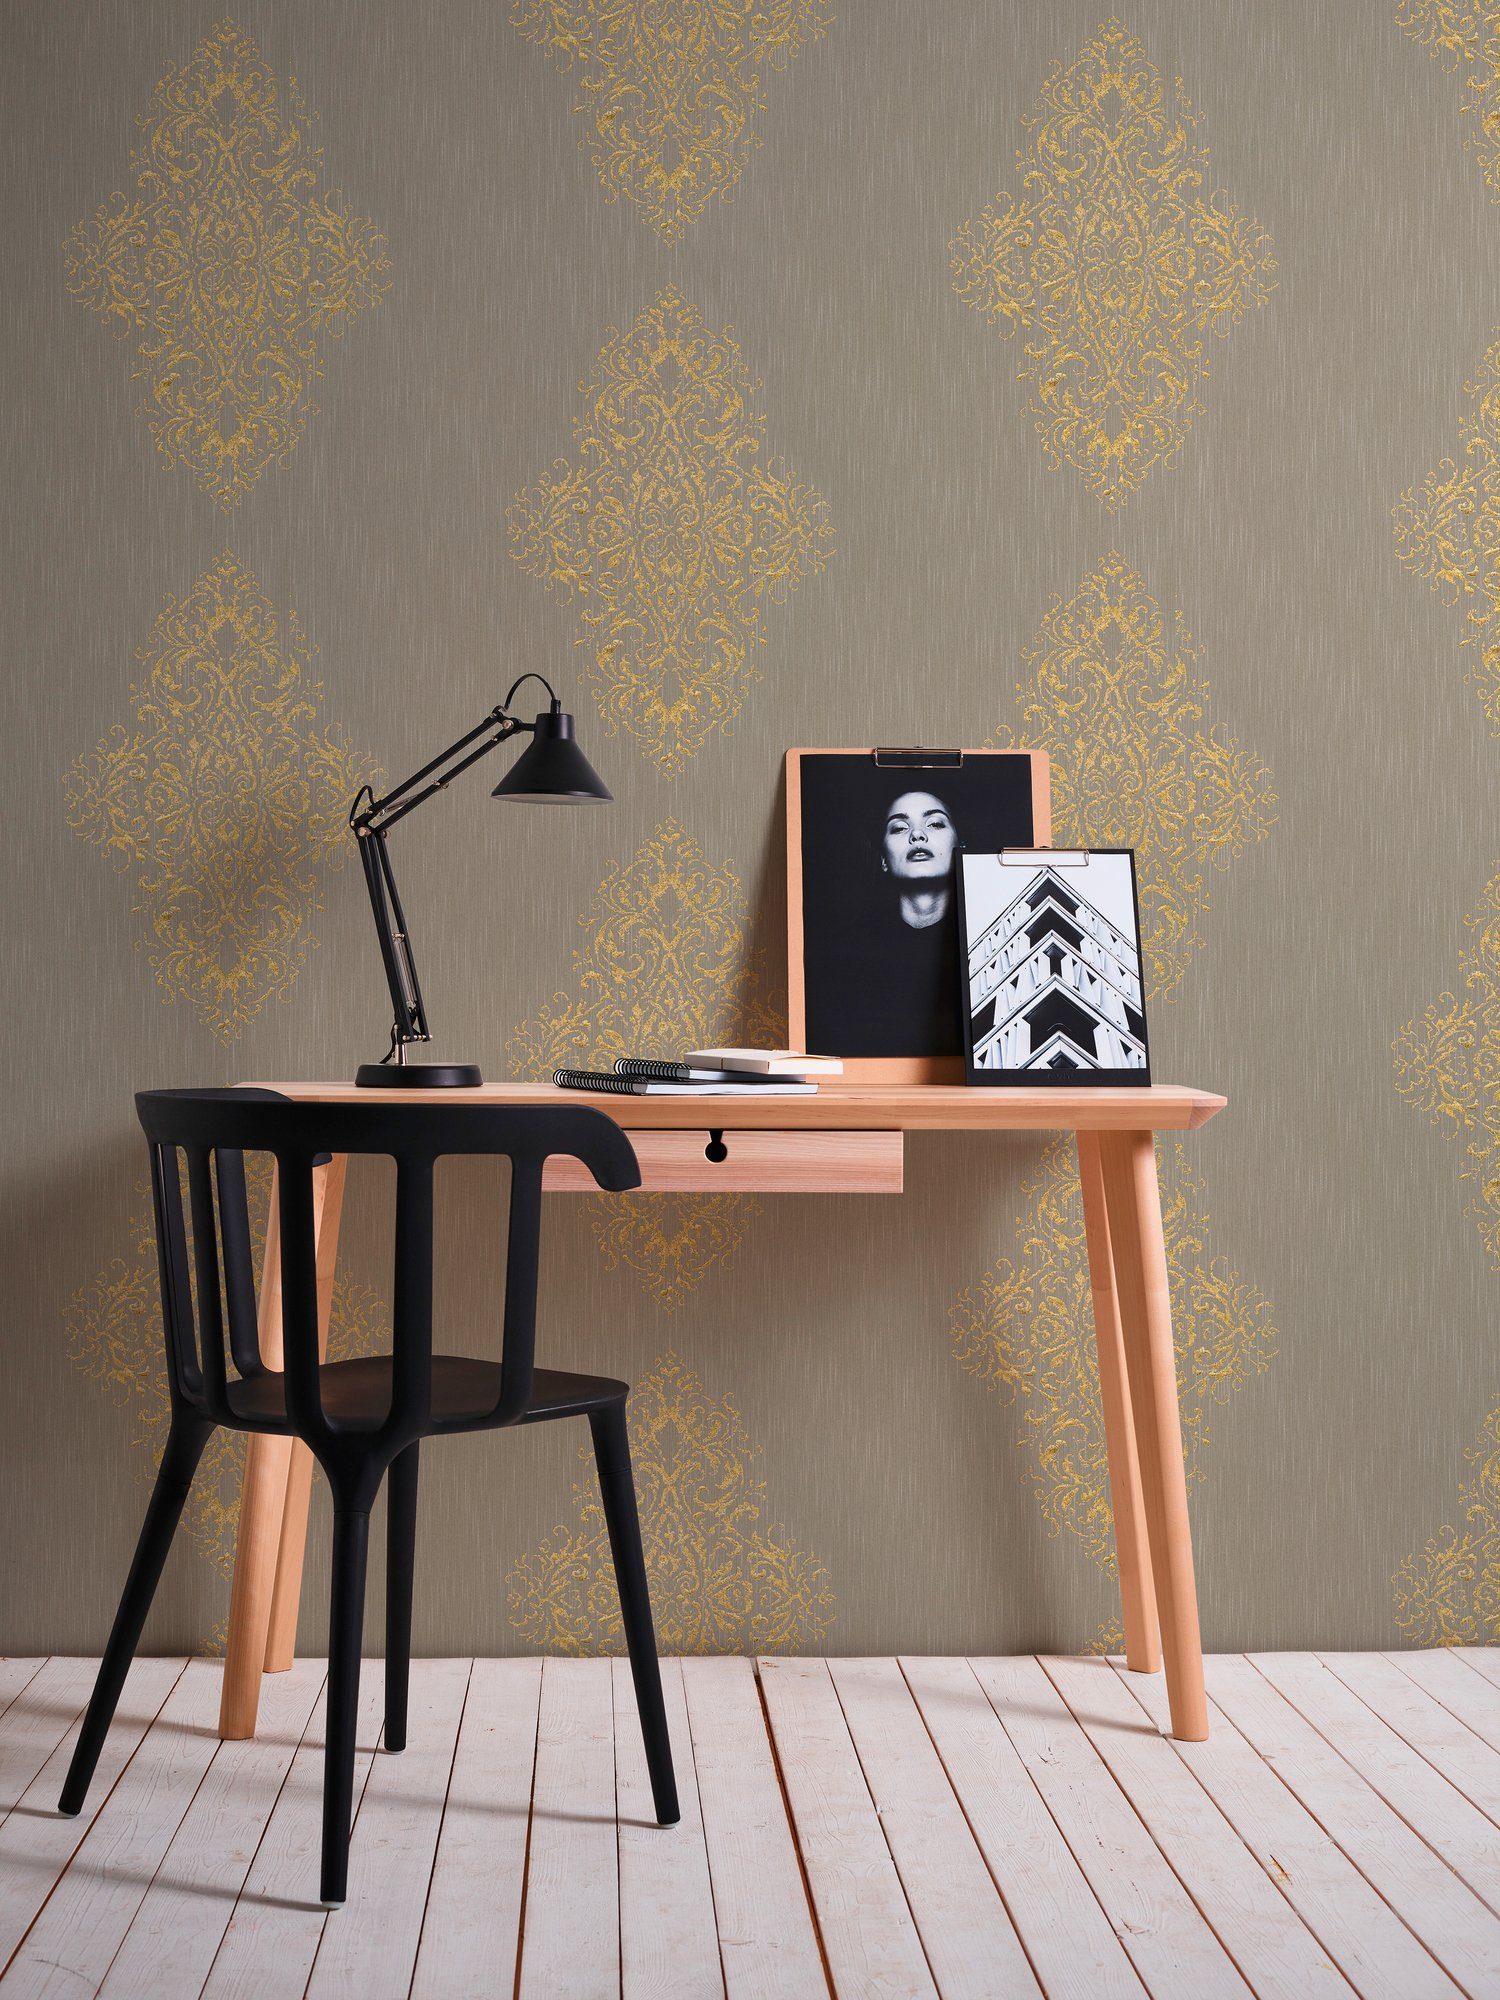 A.S. Création Architects Paper Textiltapete samtig, wallpaper, Metallic Barock, Textil Tapete Effekt Barock Luxury beige/gold